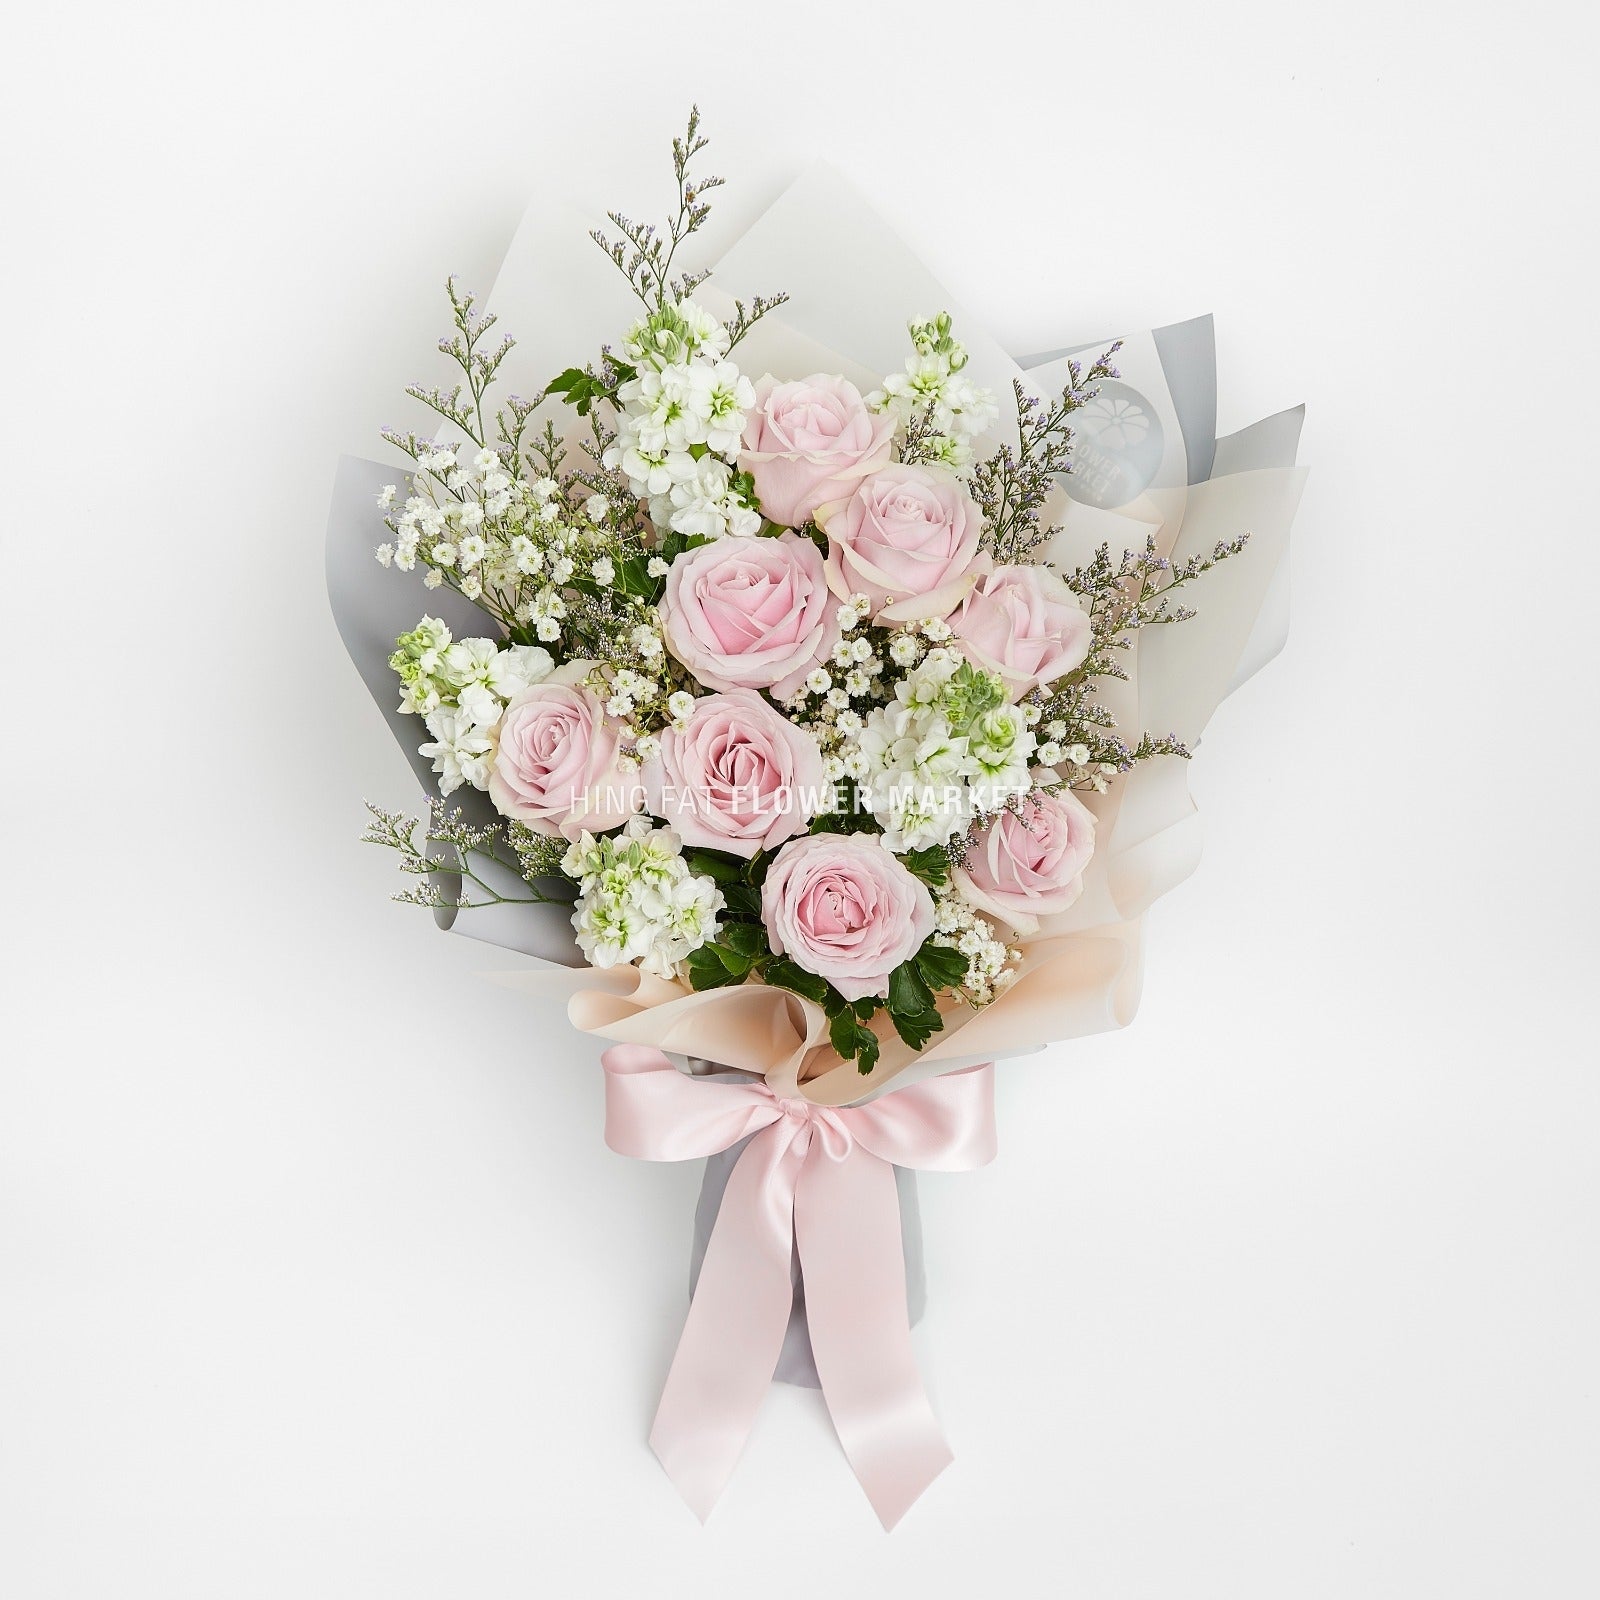 淺粉玫瑰滿天星花束 Light pink rose and baby's breath bouquet